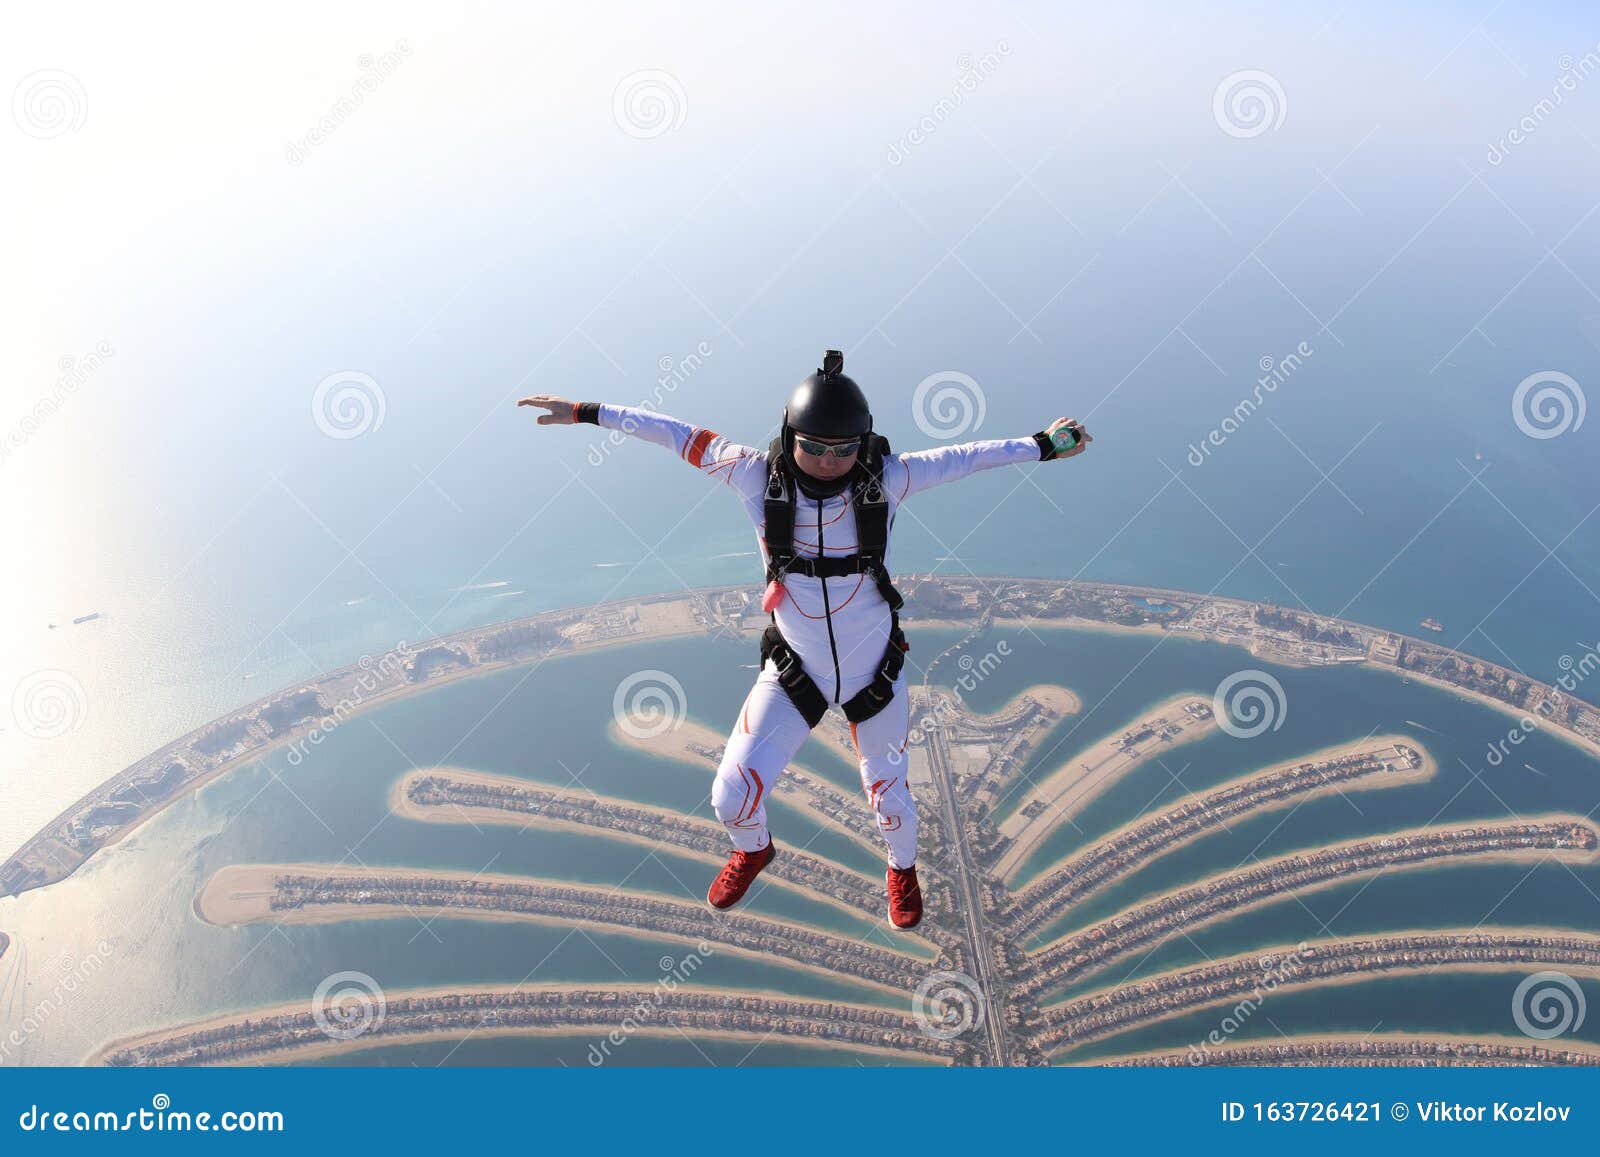 dubai.adrenalin flying in skydive dubai.